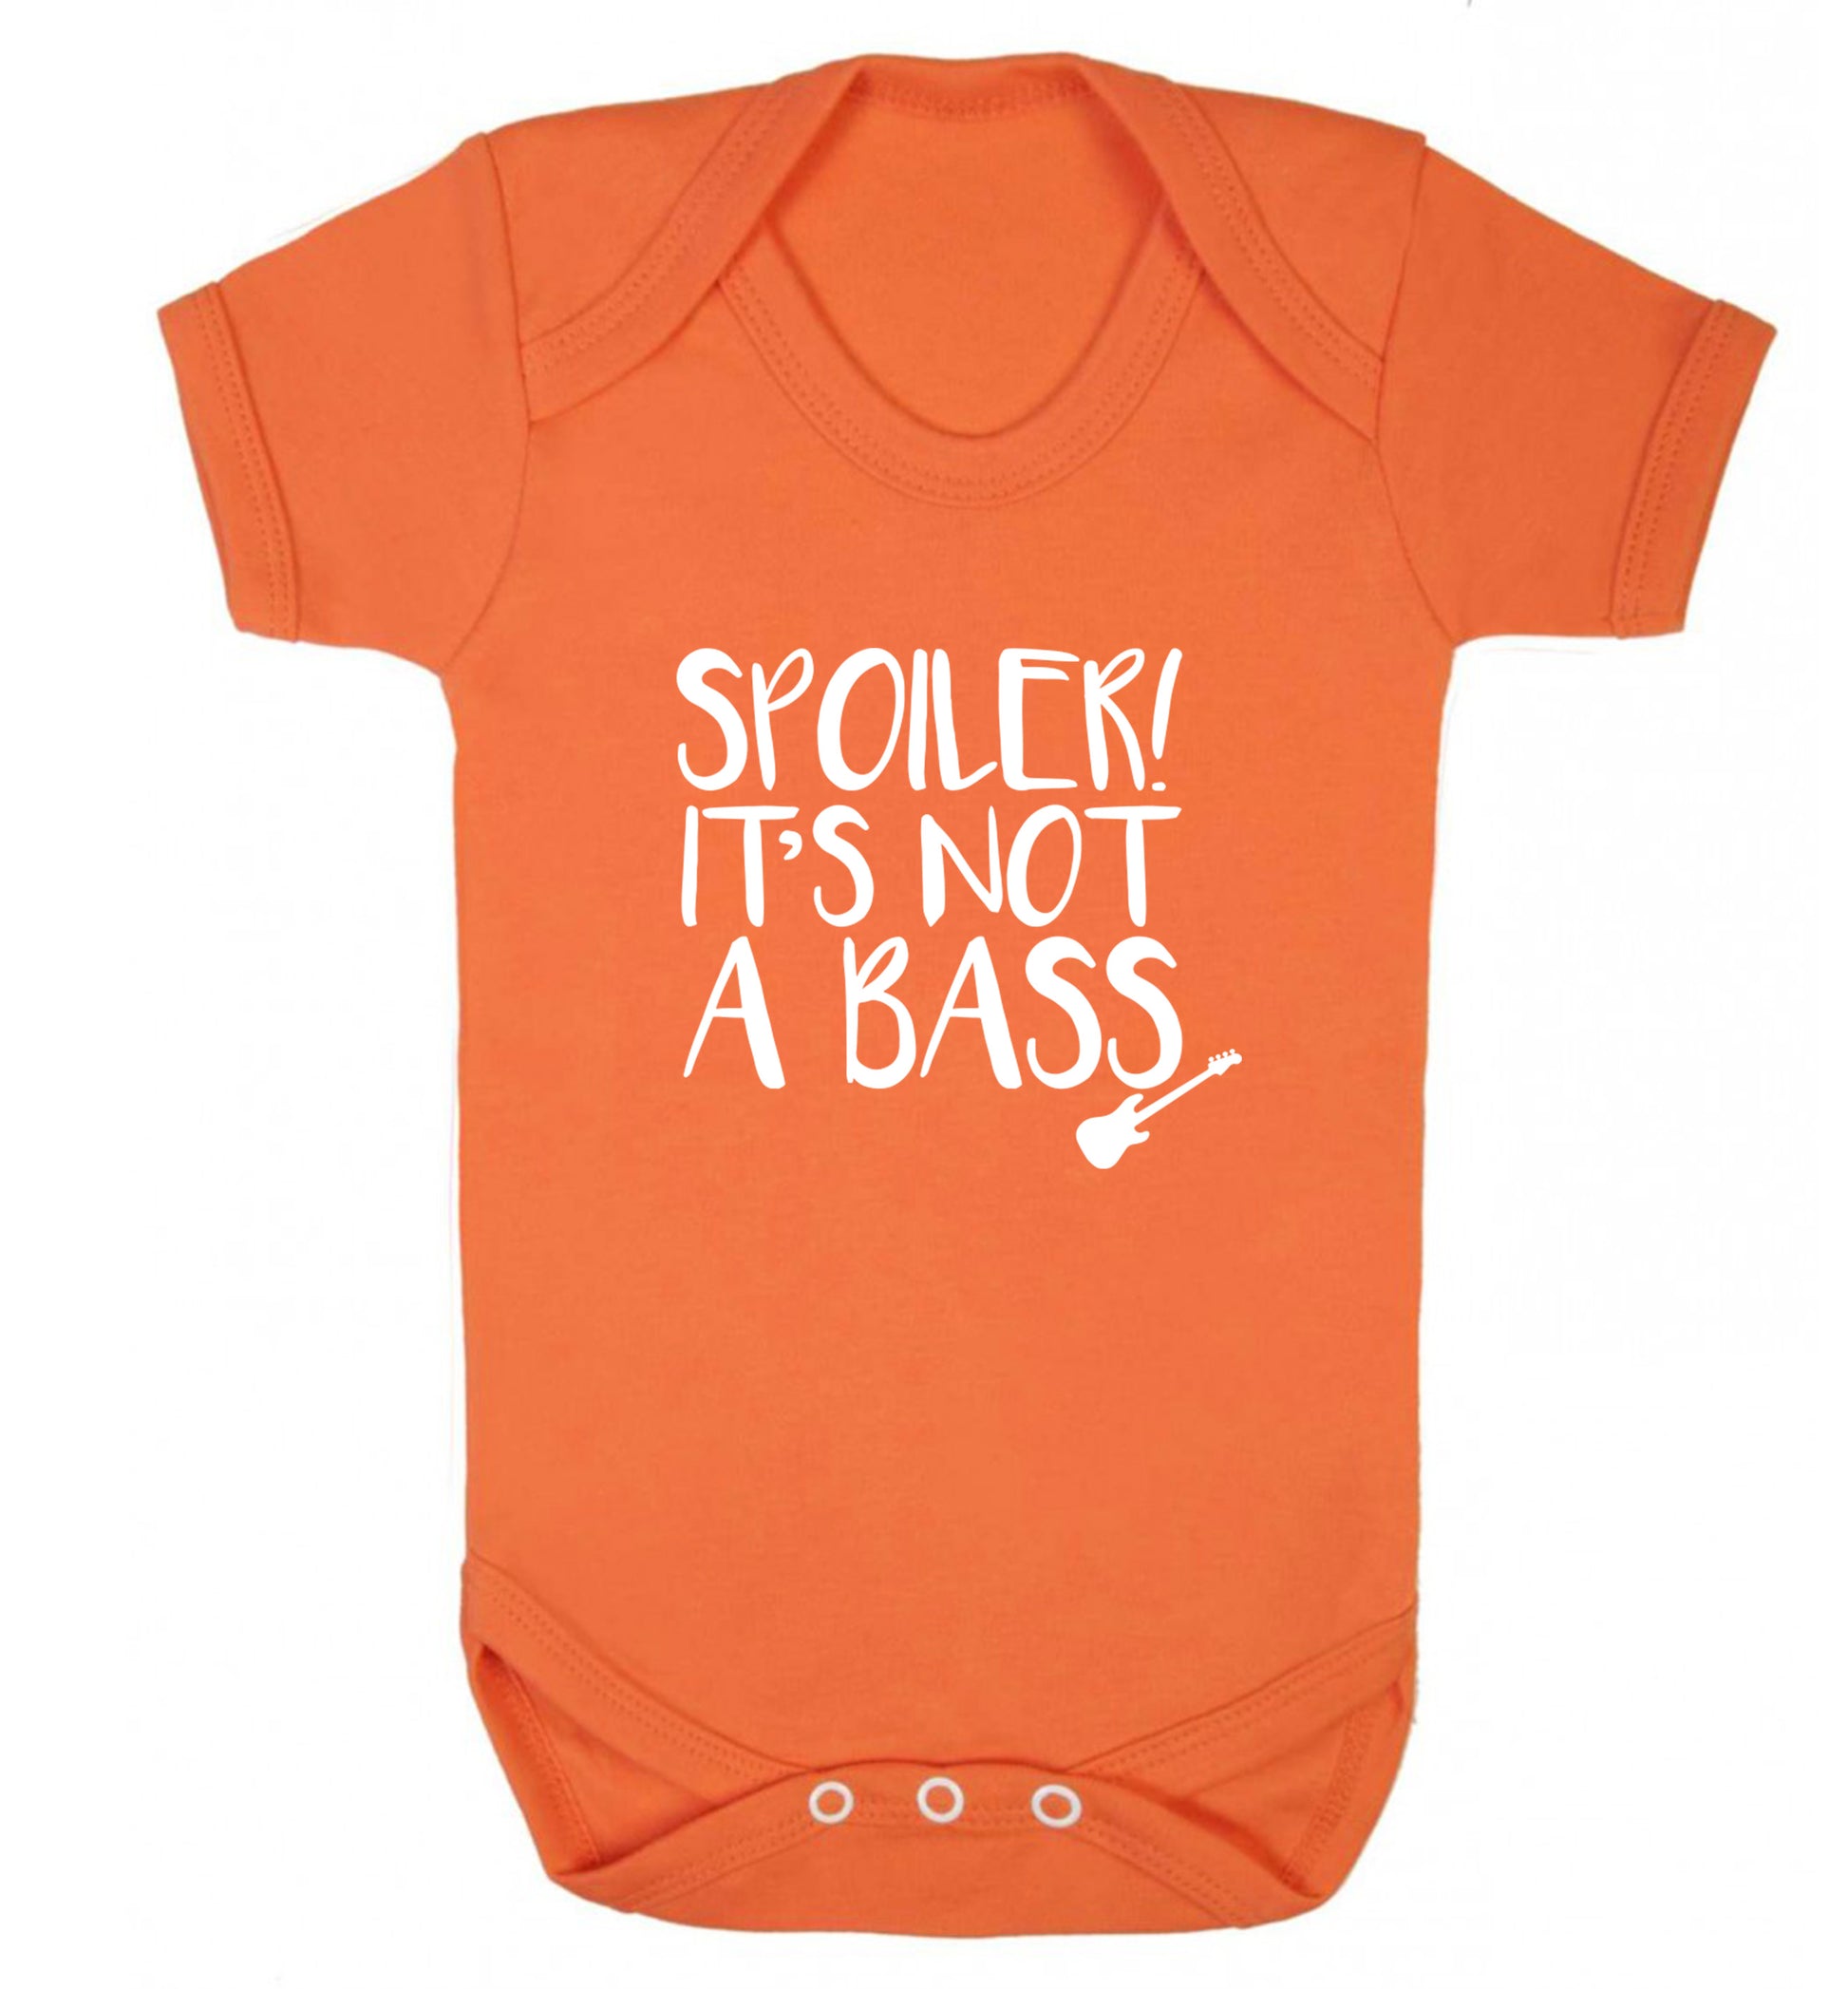 Spoiler it's not a bass Baby Vest orange 18-24 months